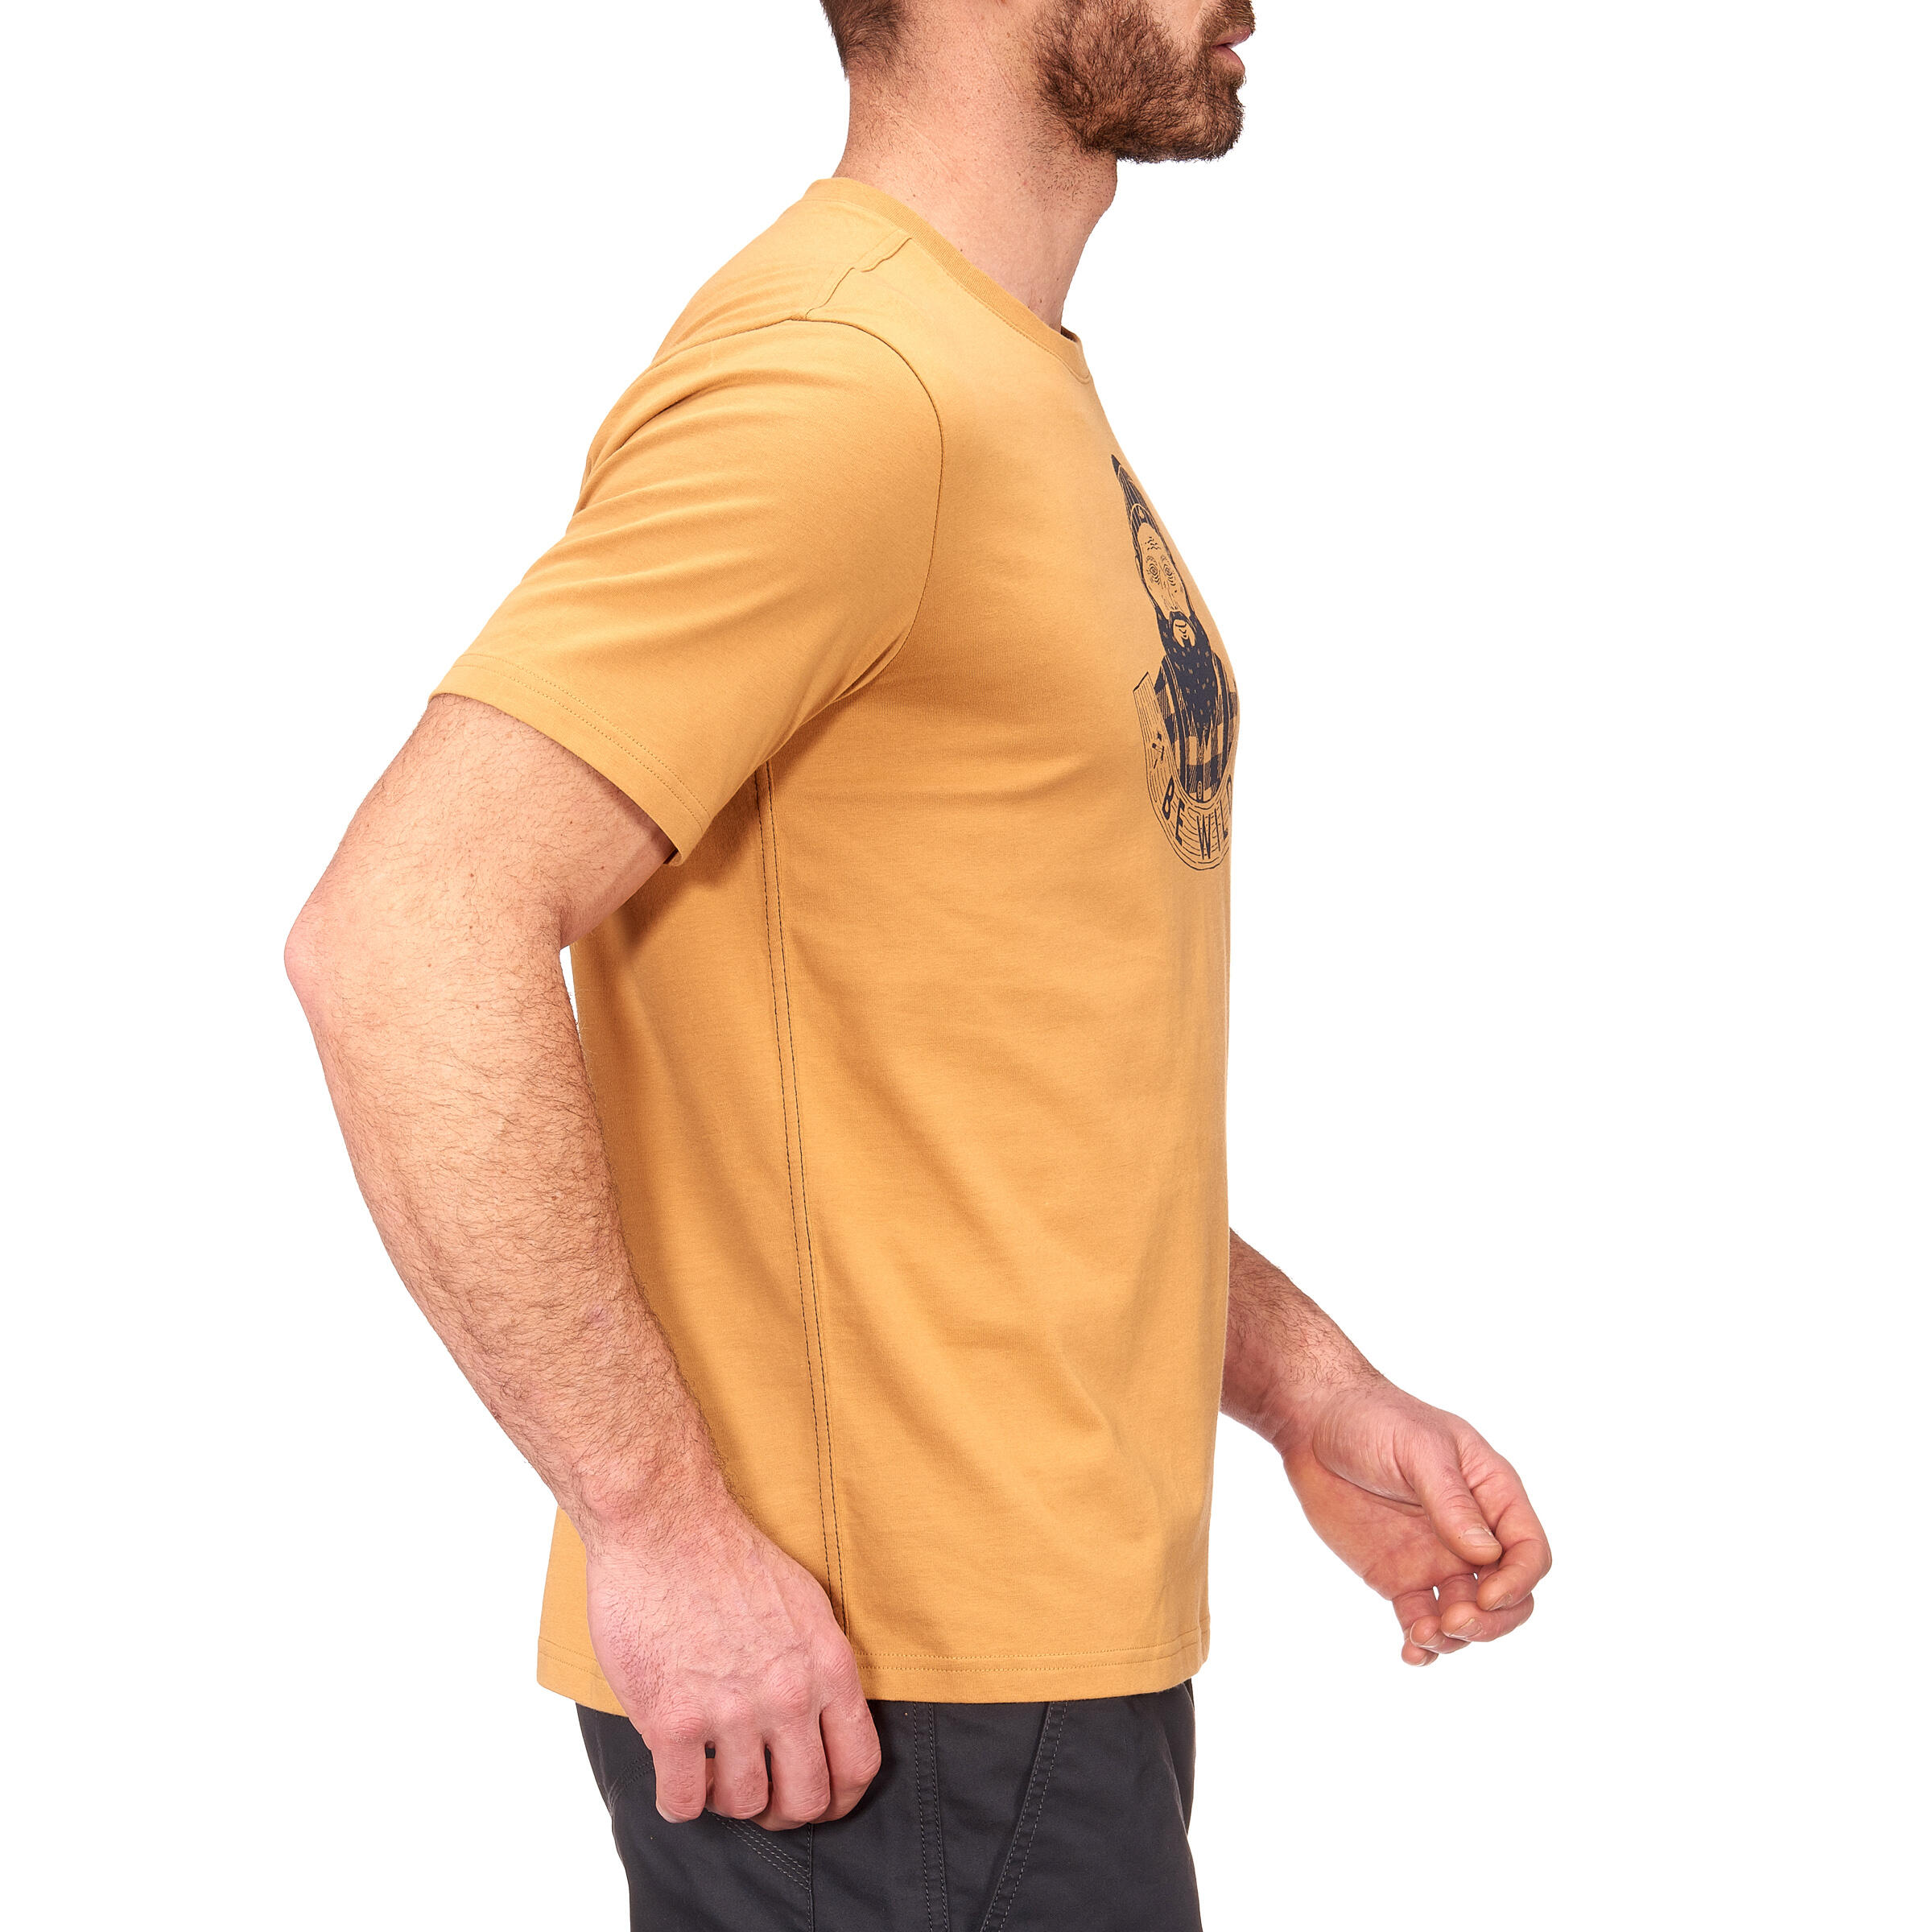 TechTIL 100 Men's Short-Sleeved Hiking T-Shirt - Ochre 2/9